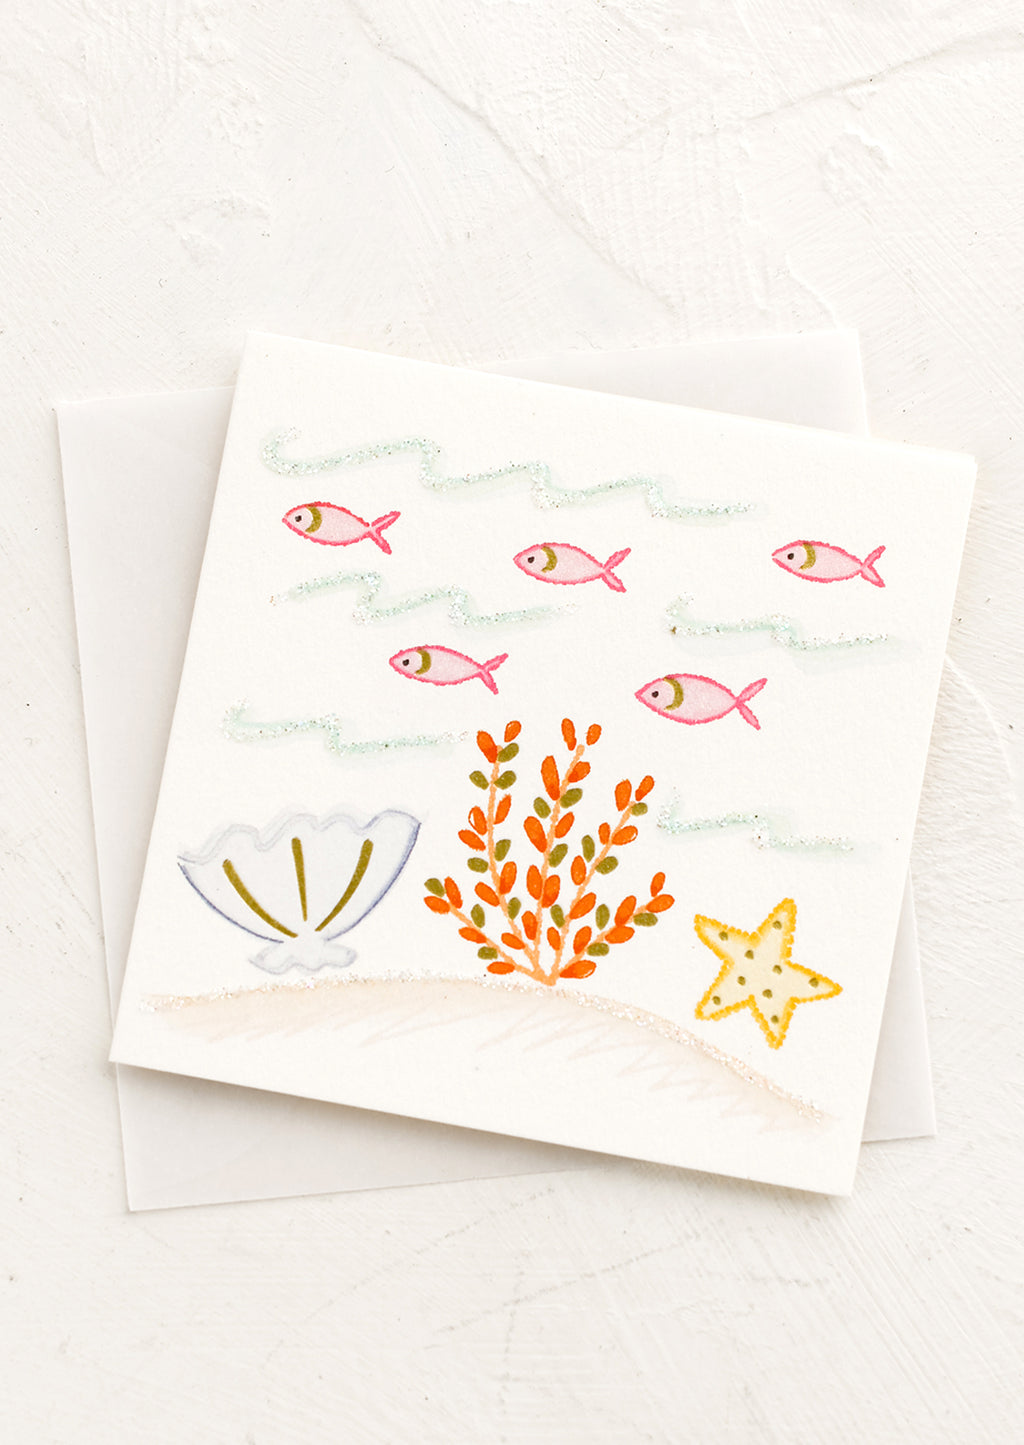 Sea Life: A small gift enclosure card with illustration of sea life scene.